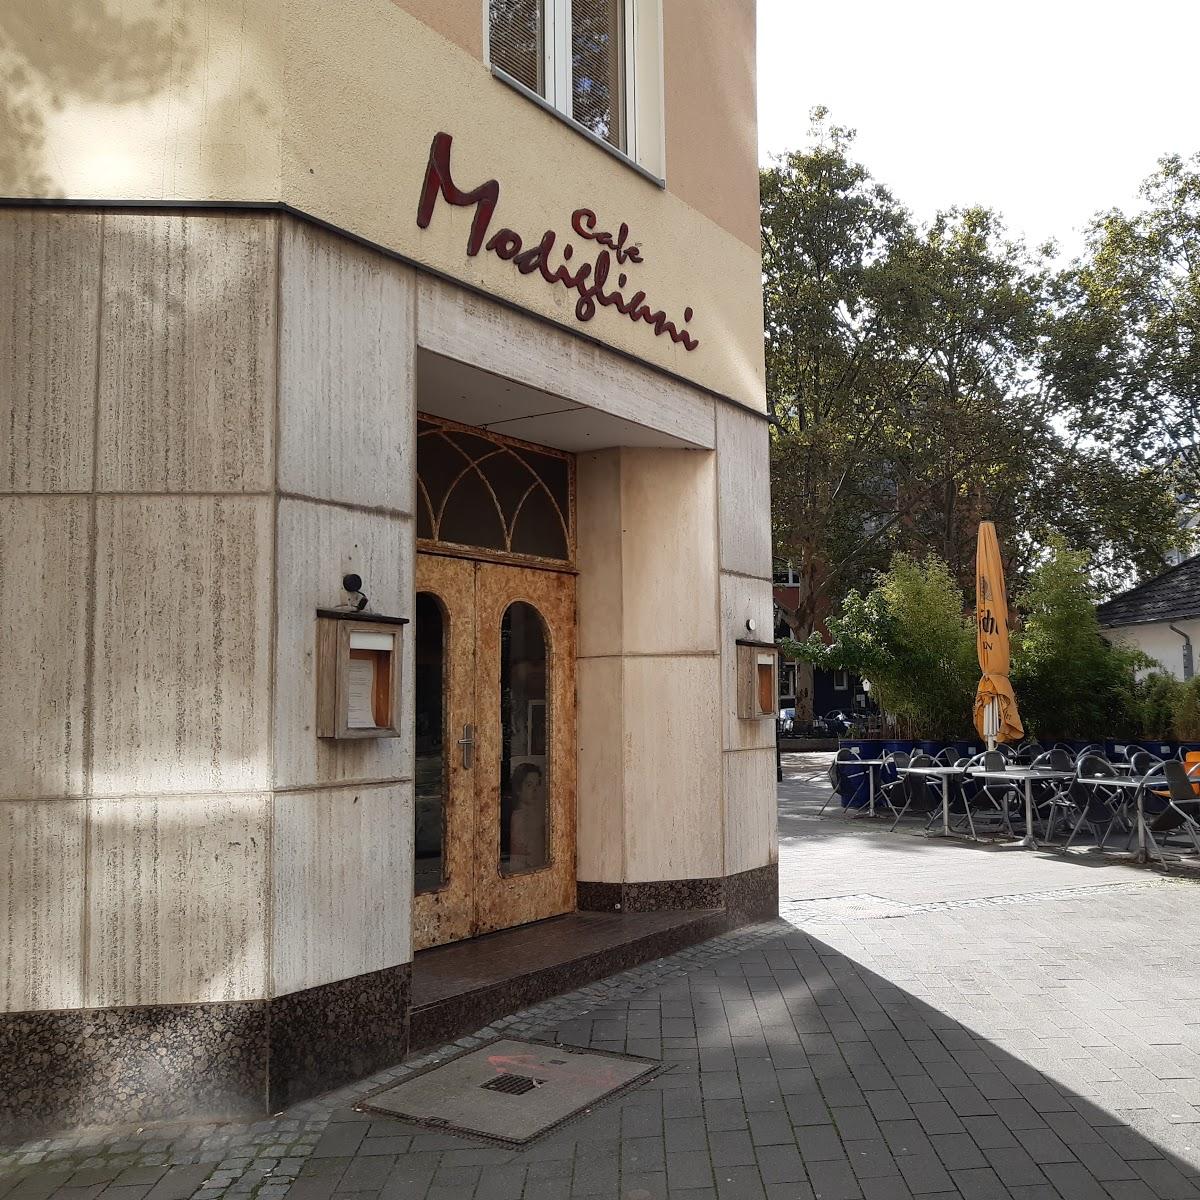 Restaurant "Café Modigliani" in Düsseldorf